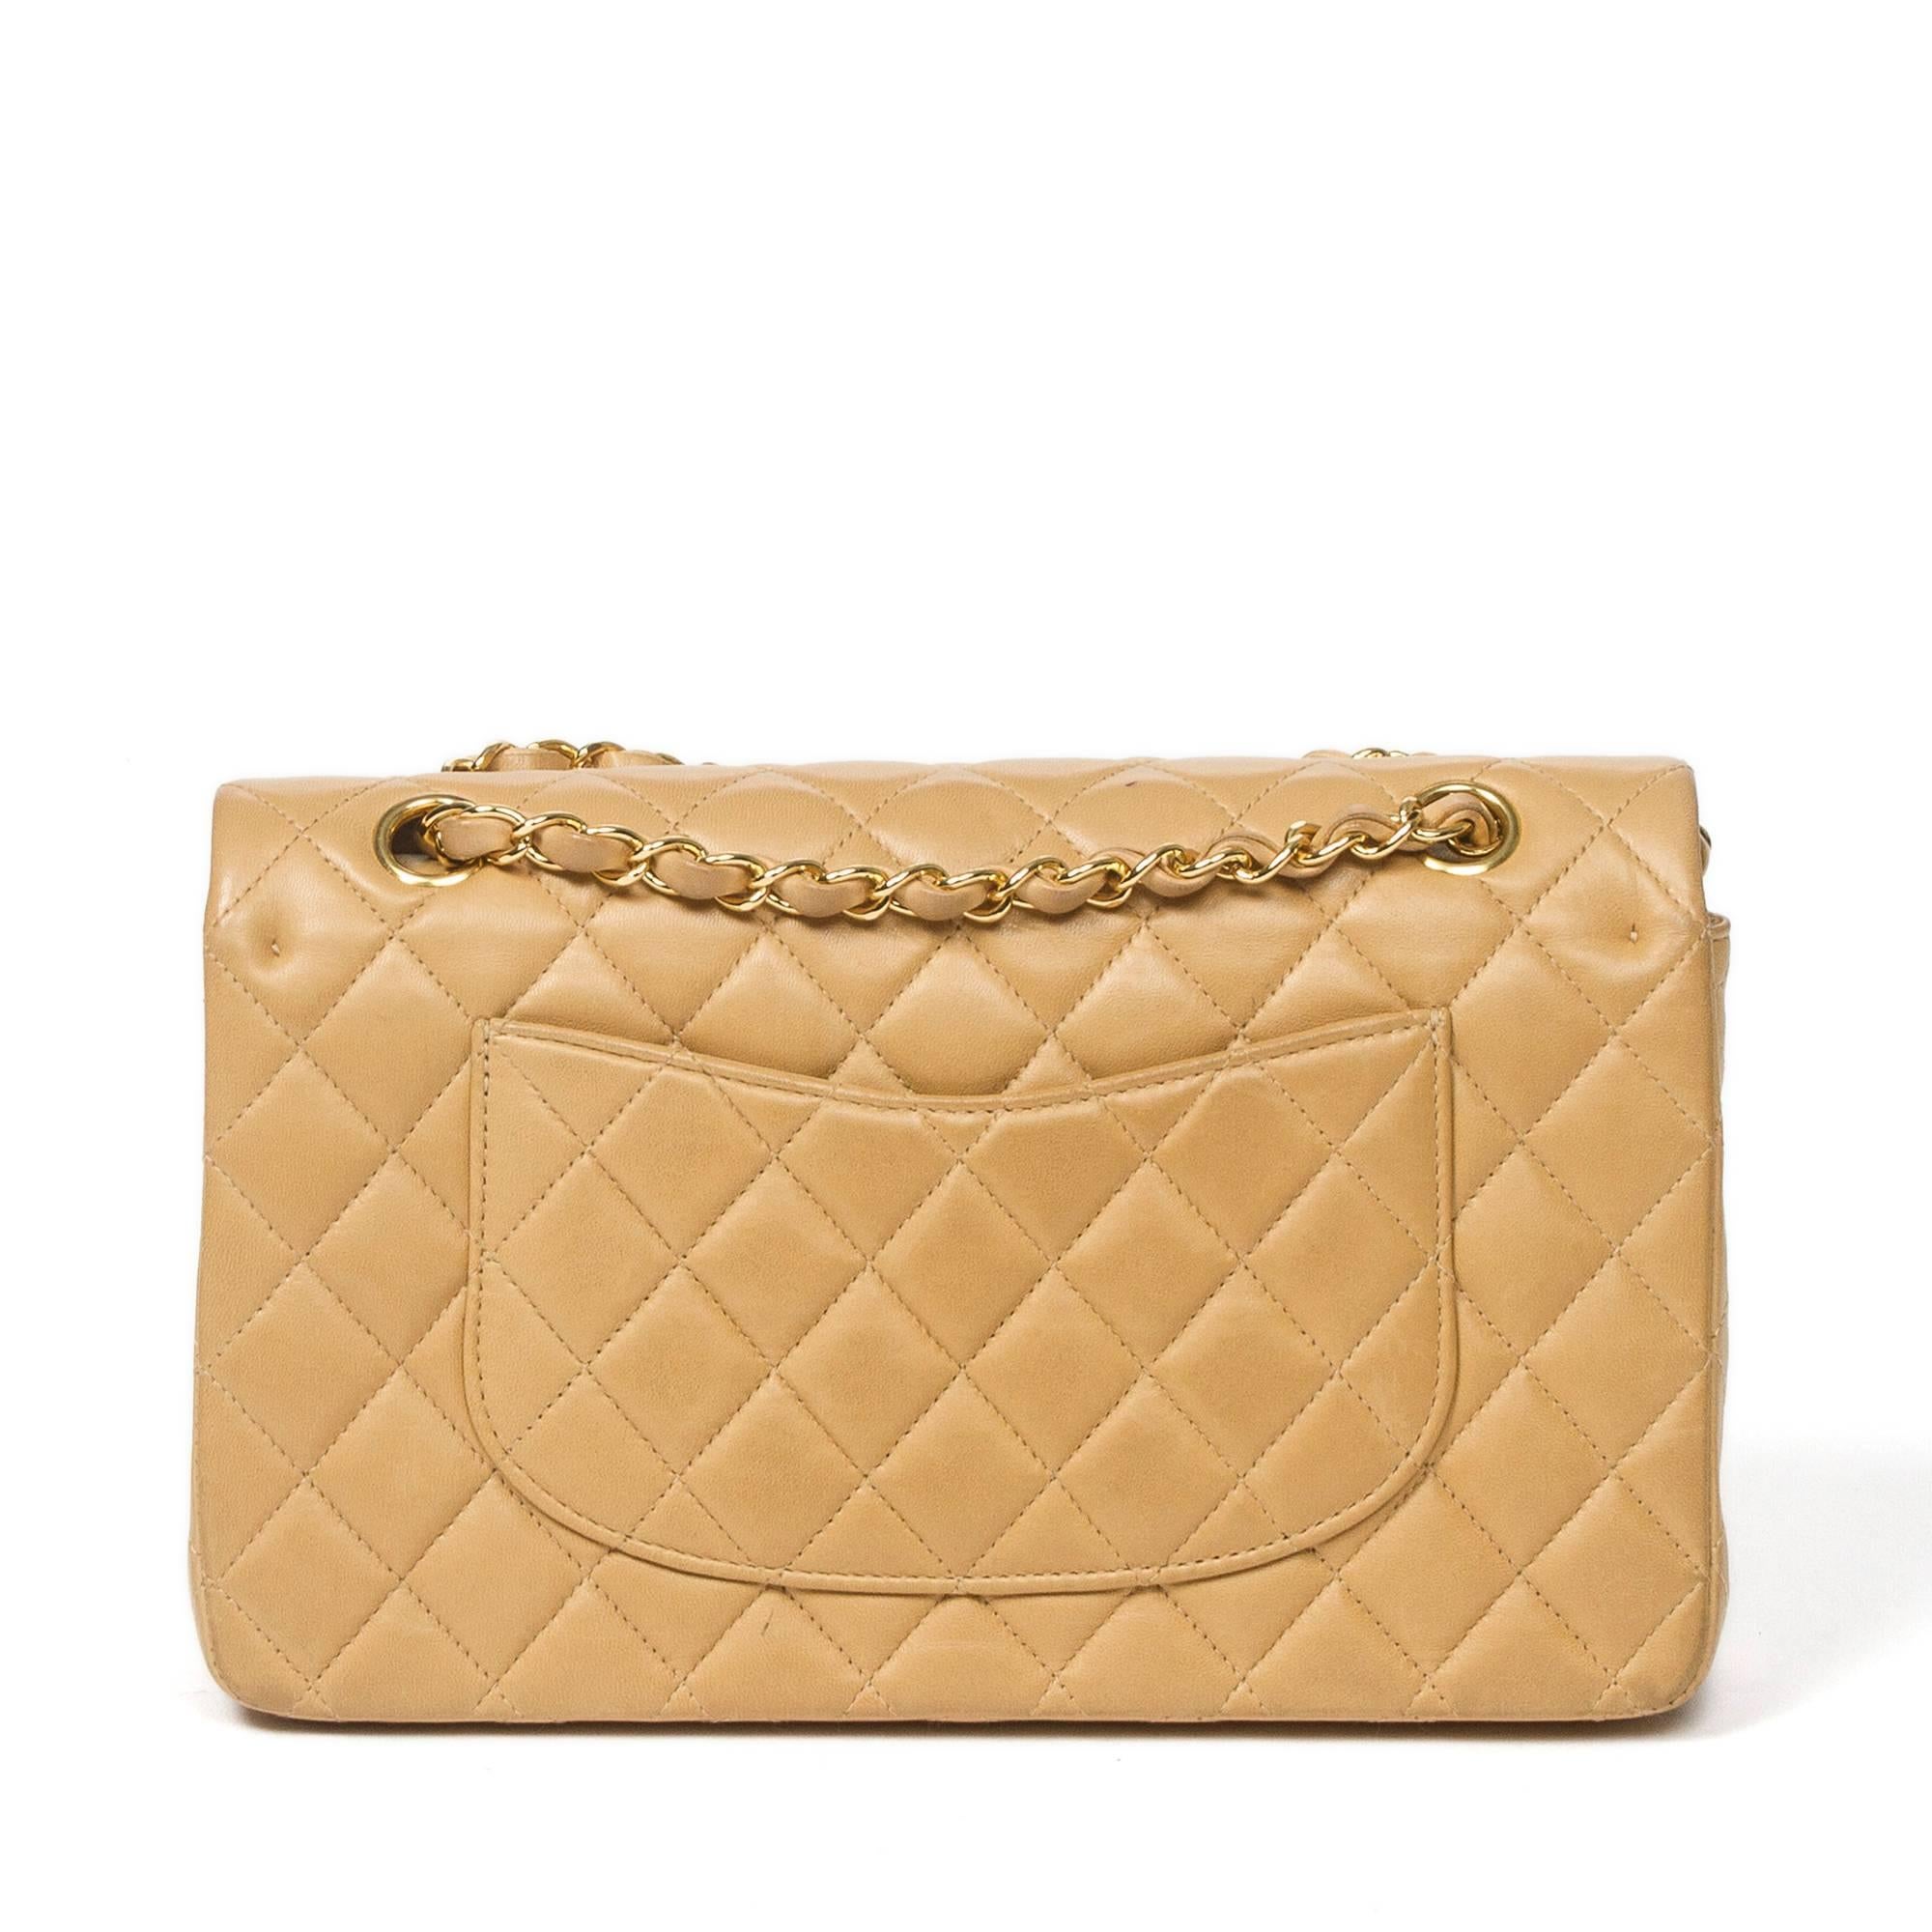 Women's Shoulder bag Chanel Classic Double Flap in beige leather